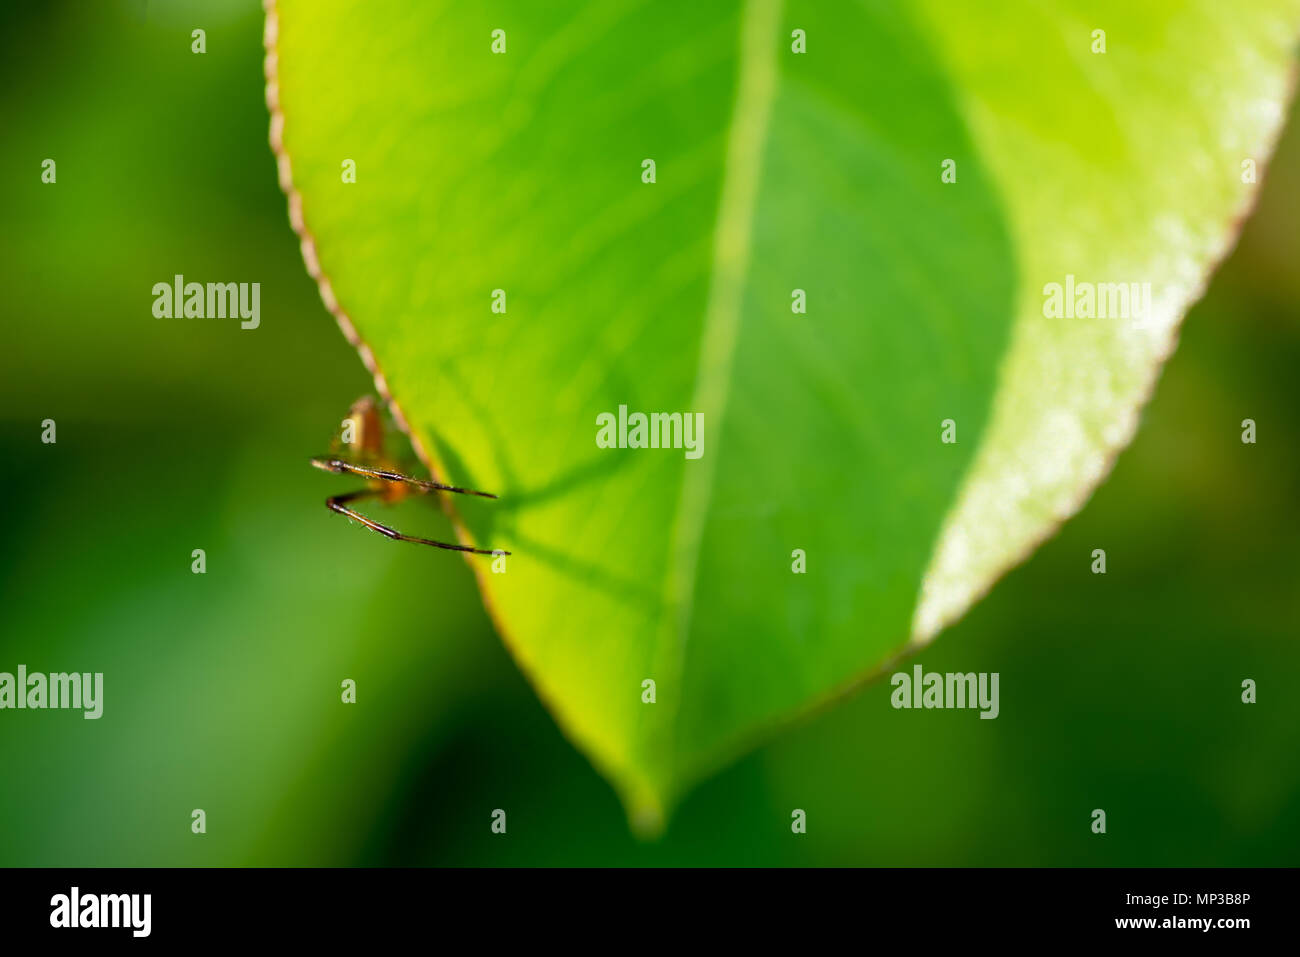 A spider on a green leaf - symbolizes arachnophobia. Stock Photo